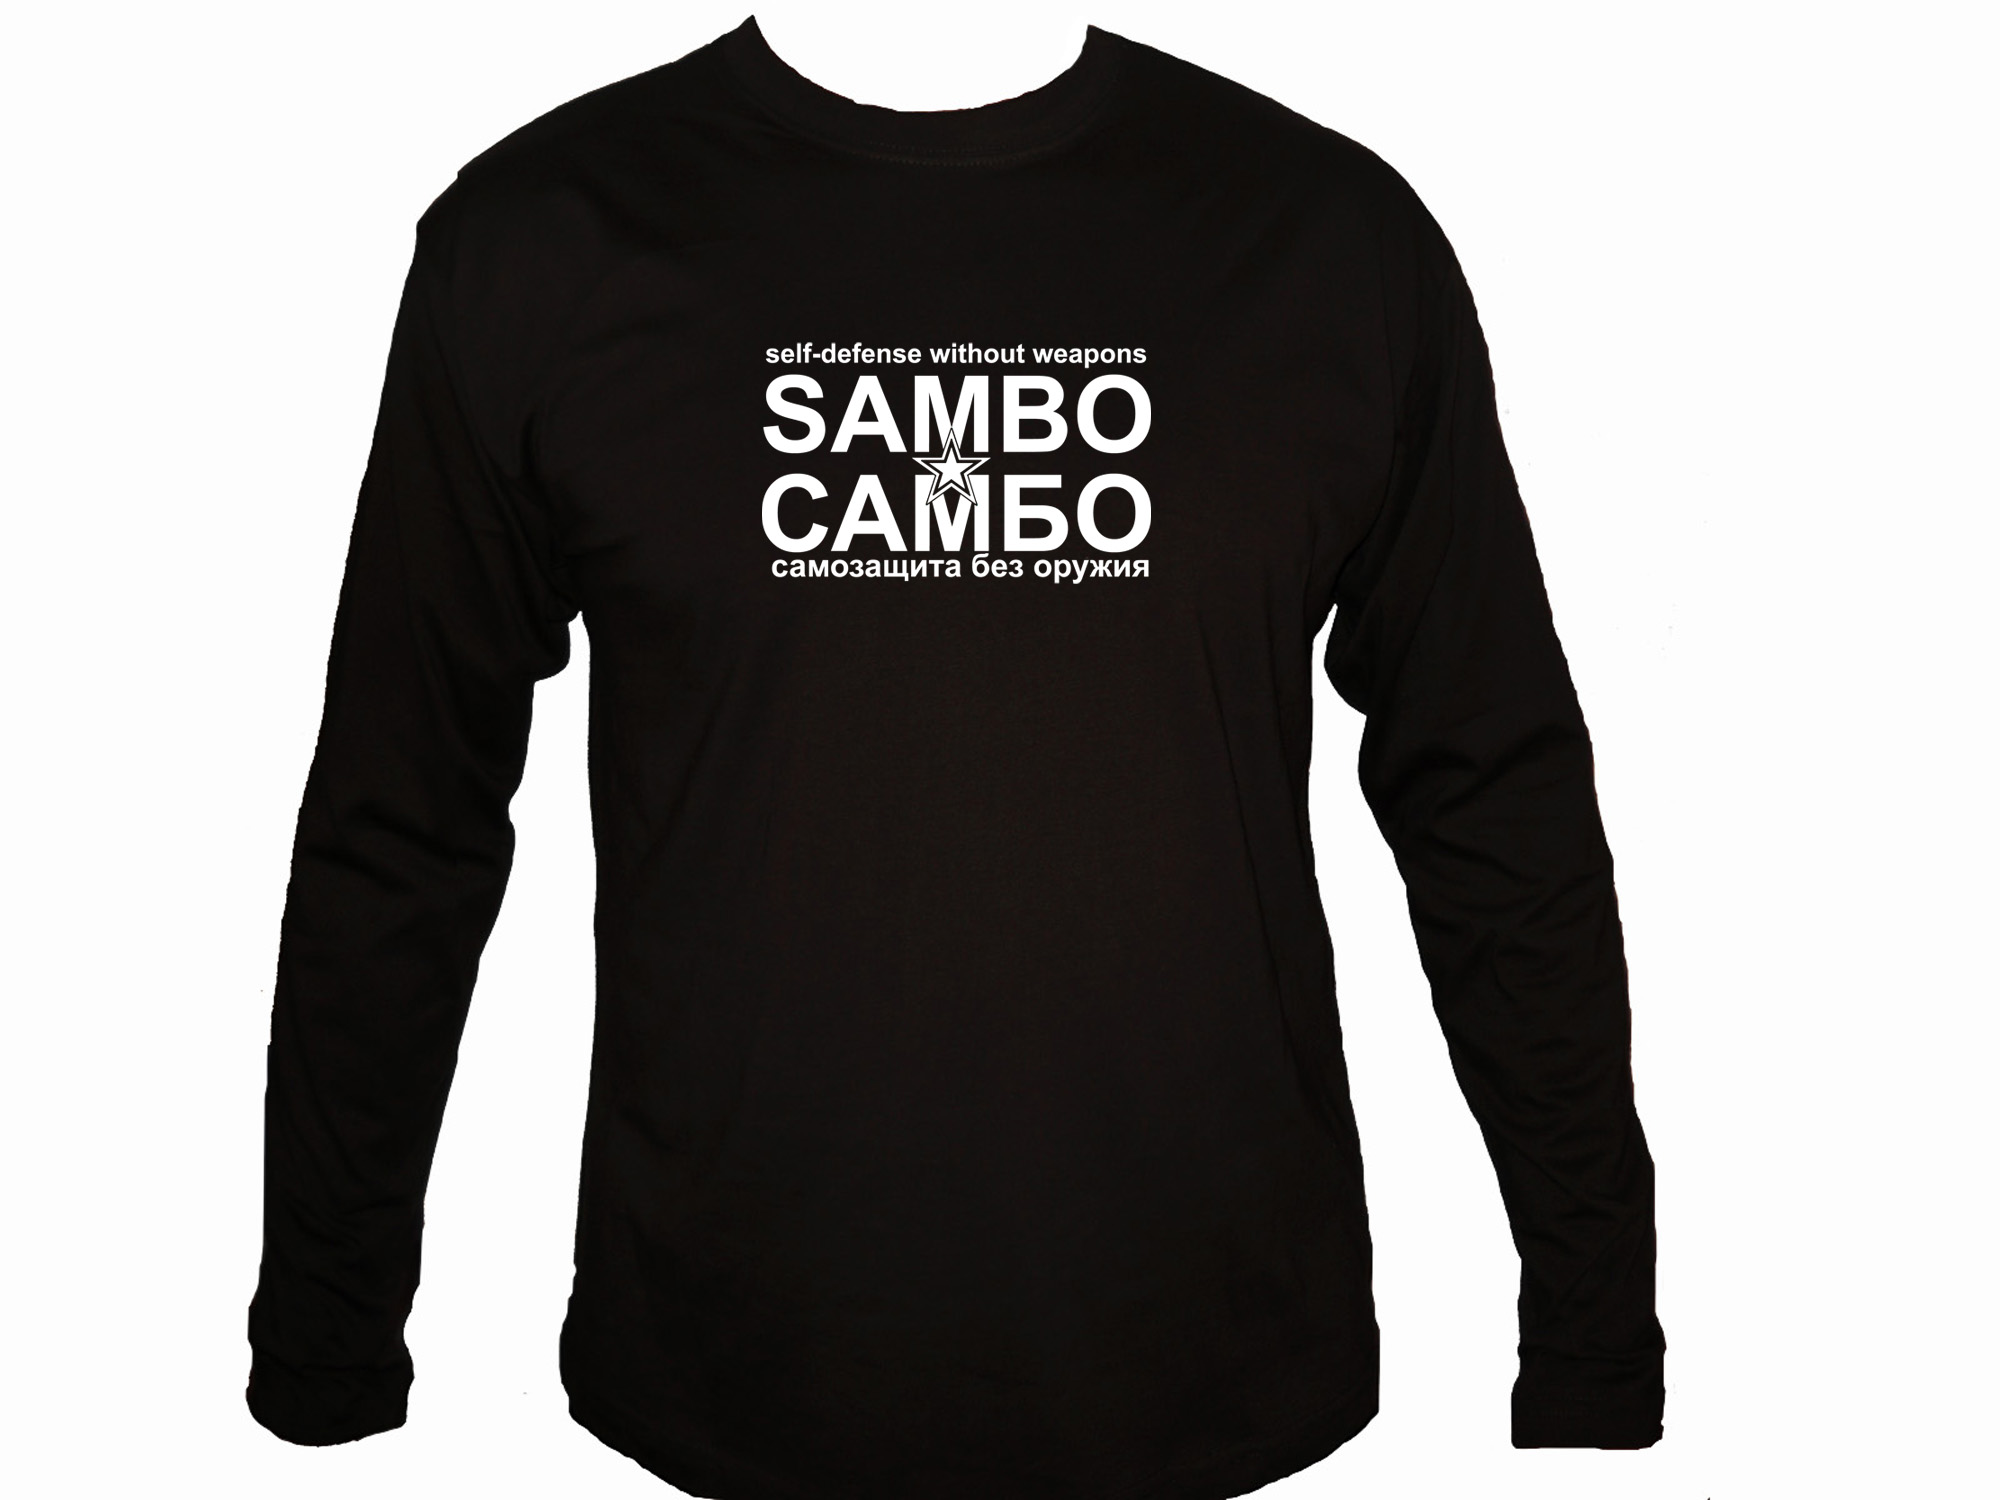 Sambo cambo sleeved t-shirt